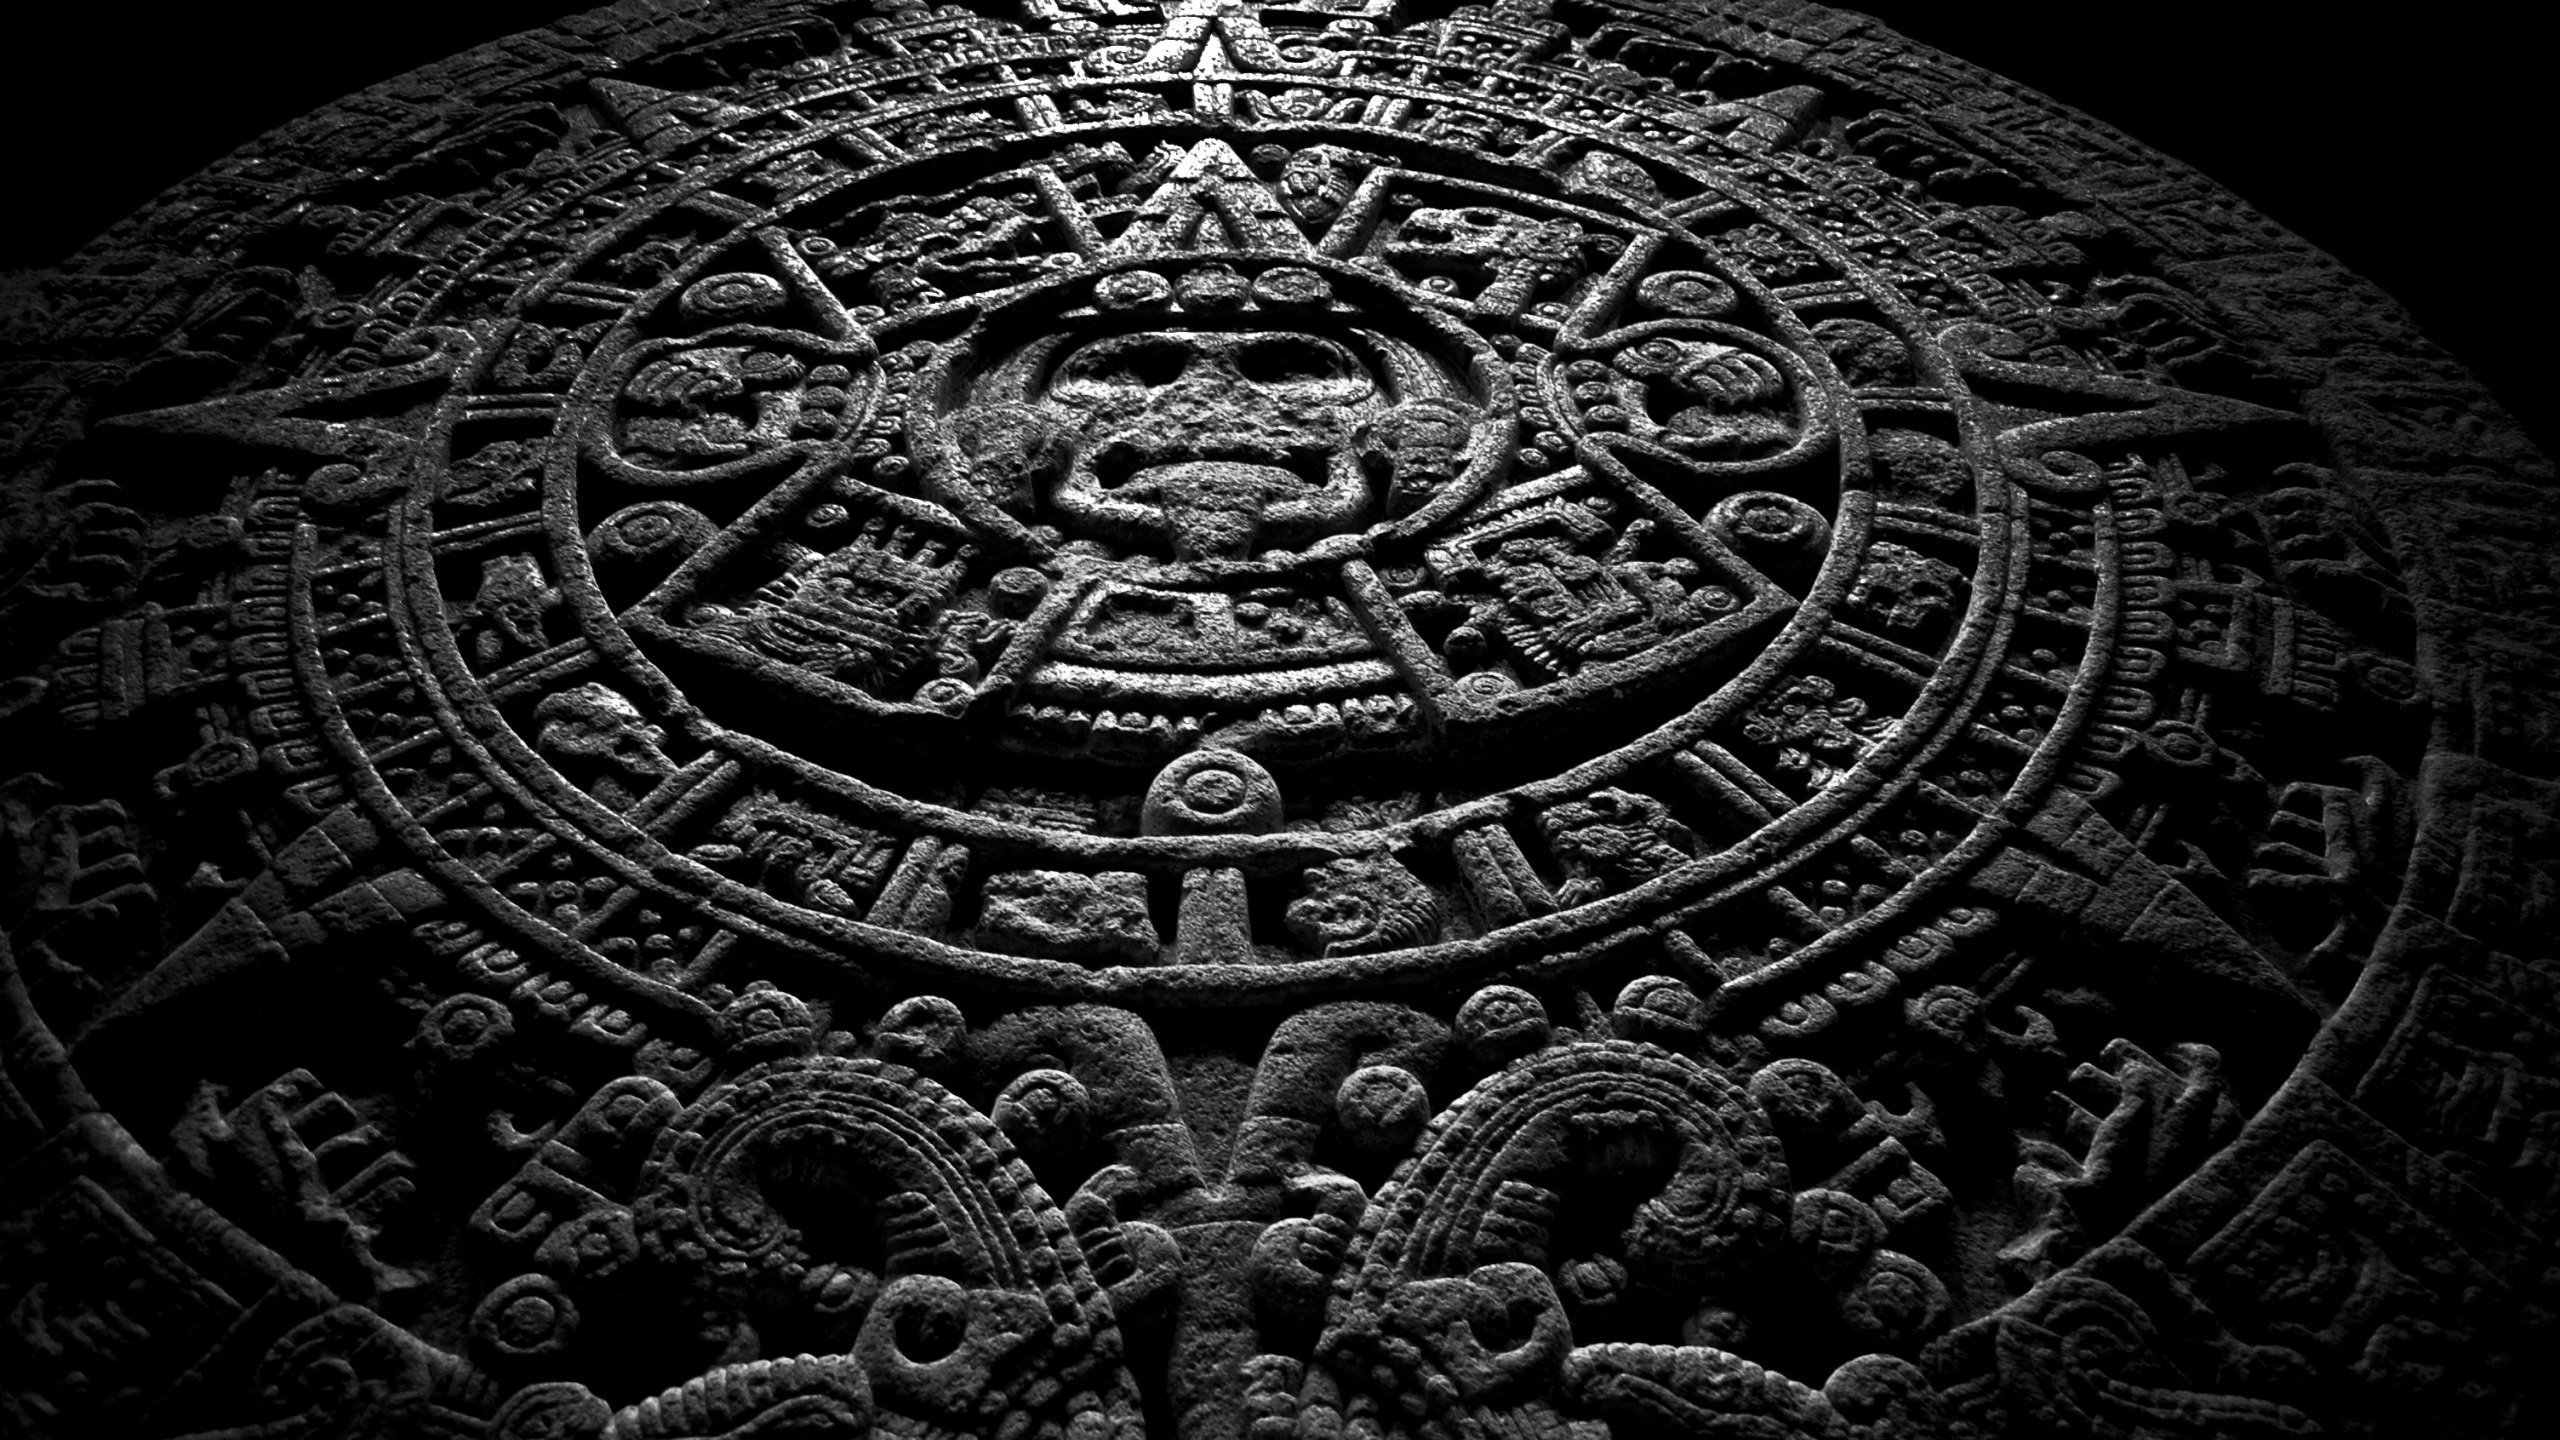 Artistic Mayan 2560x1440